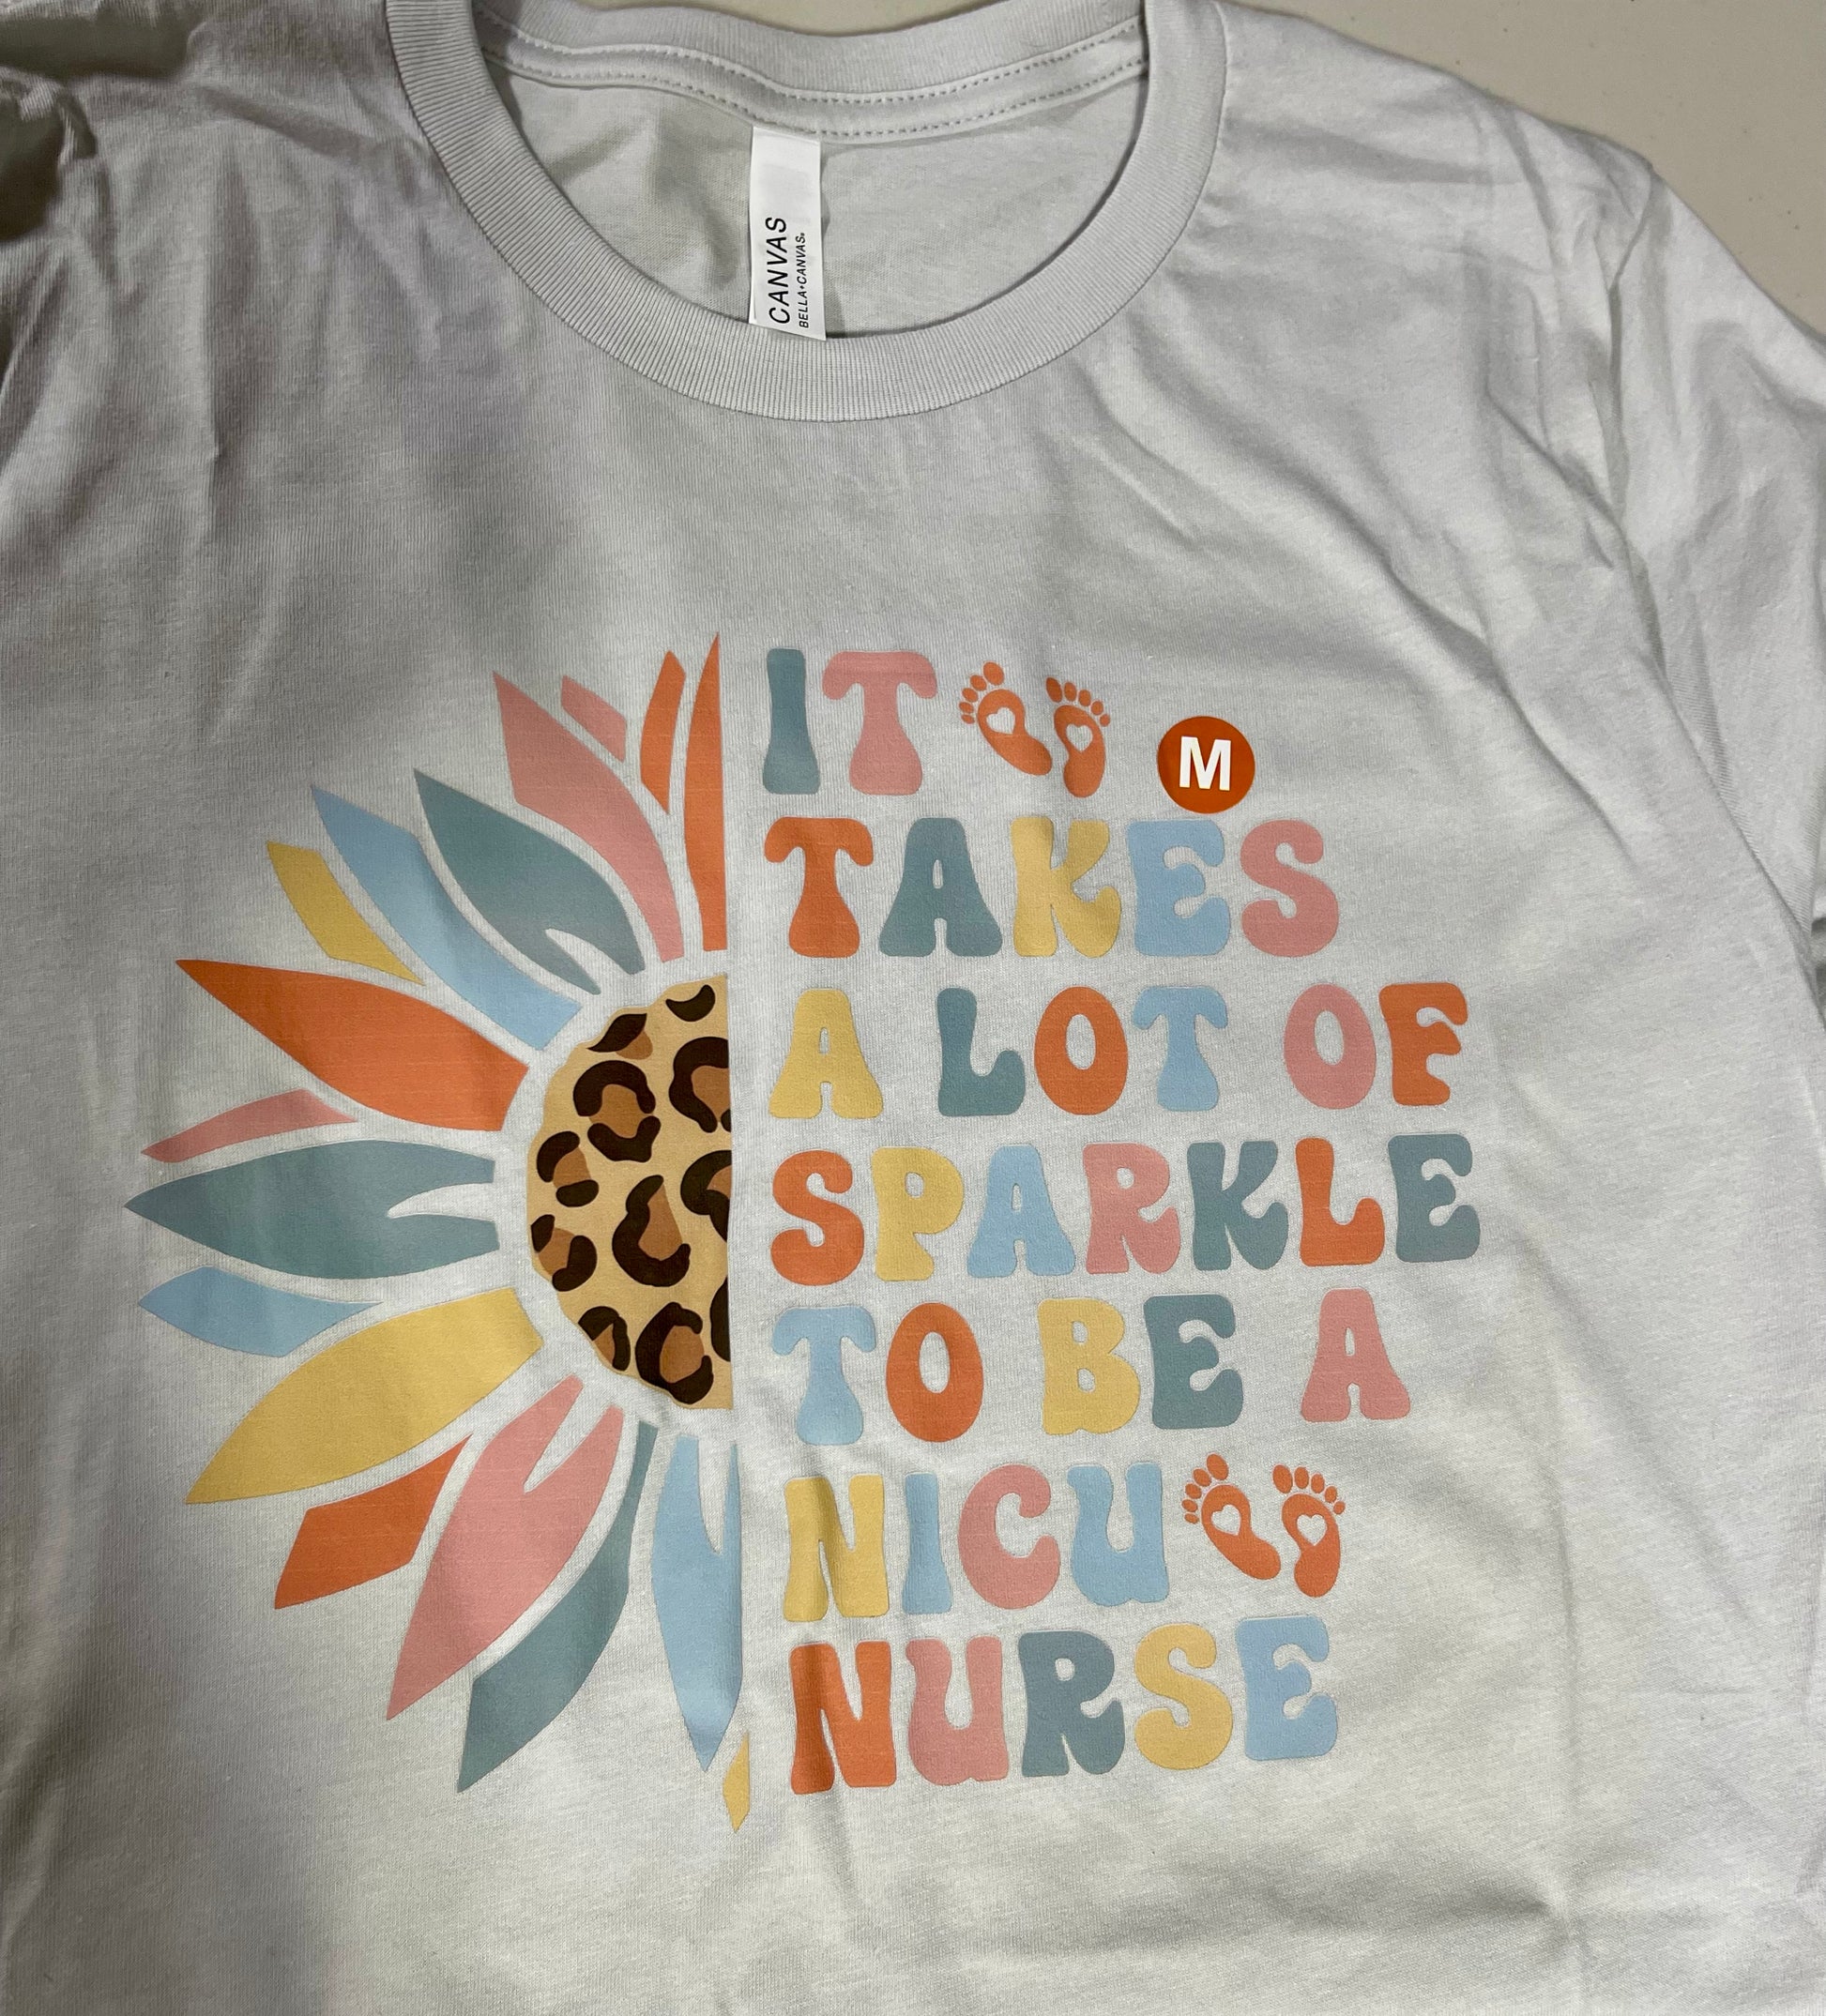 Nursing T-shirts